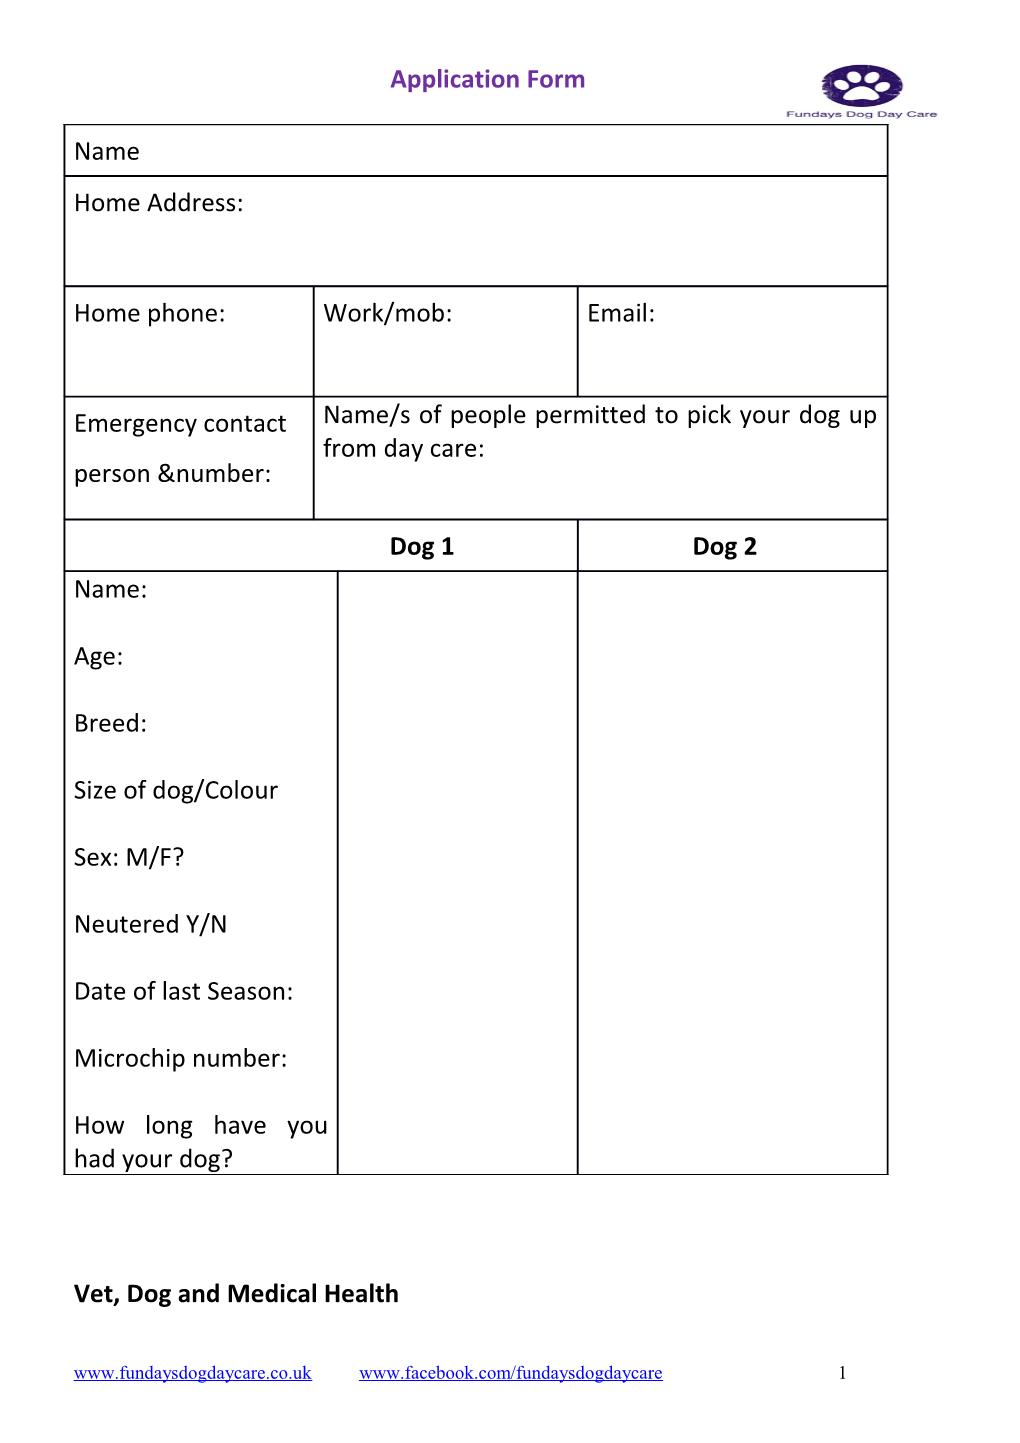 Fundays Dog Day Care Application